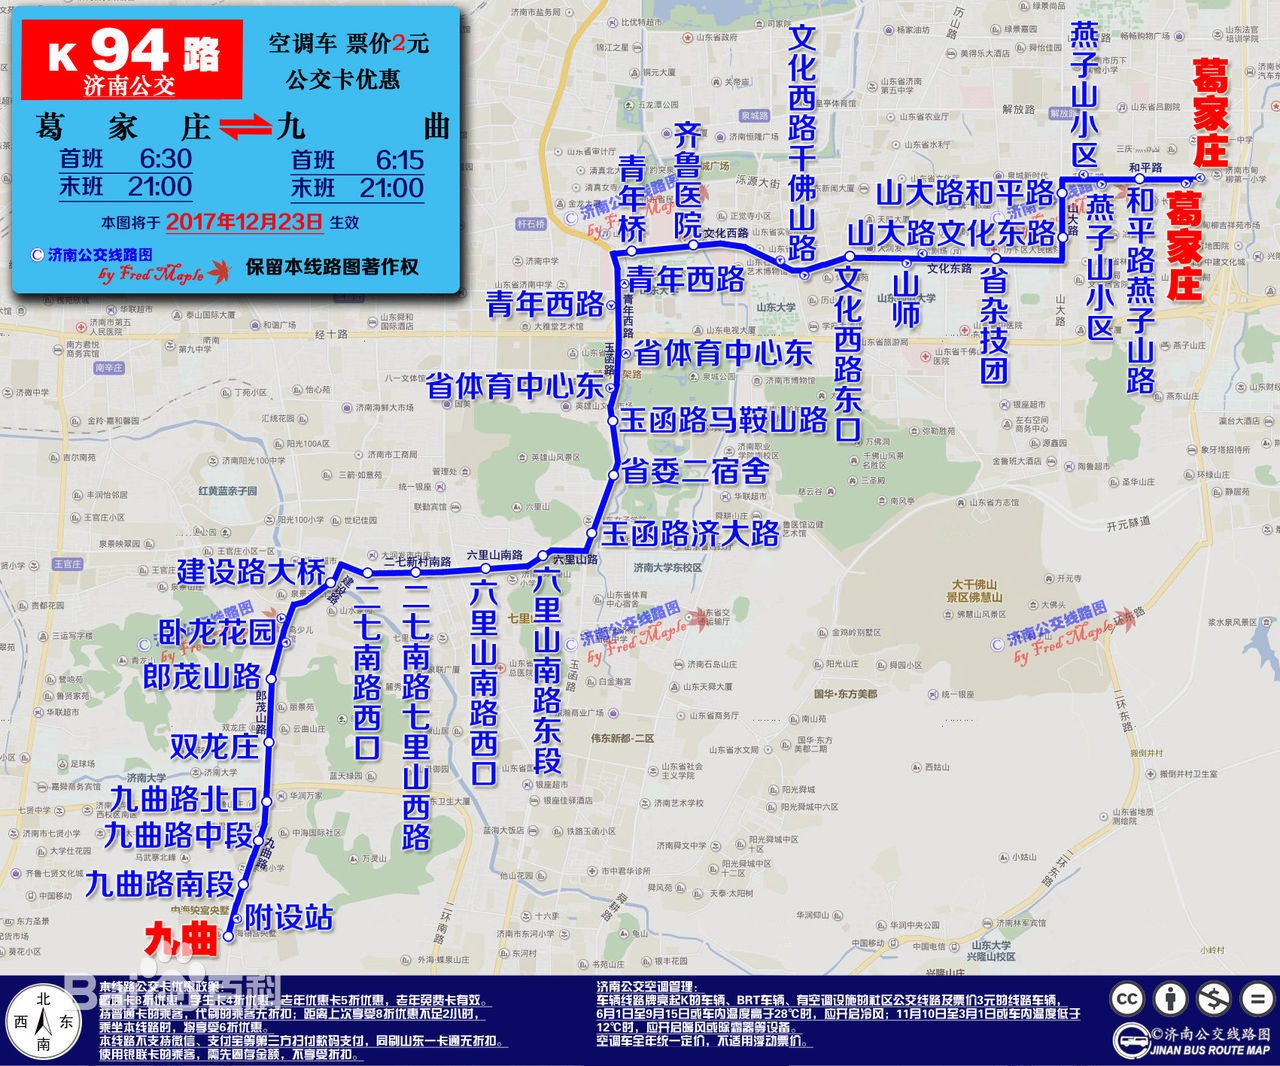 K94路線路圖